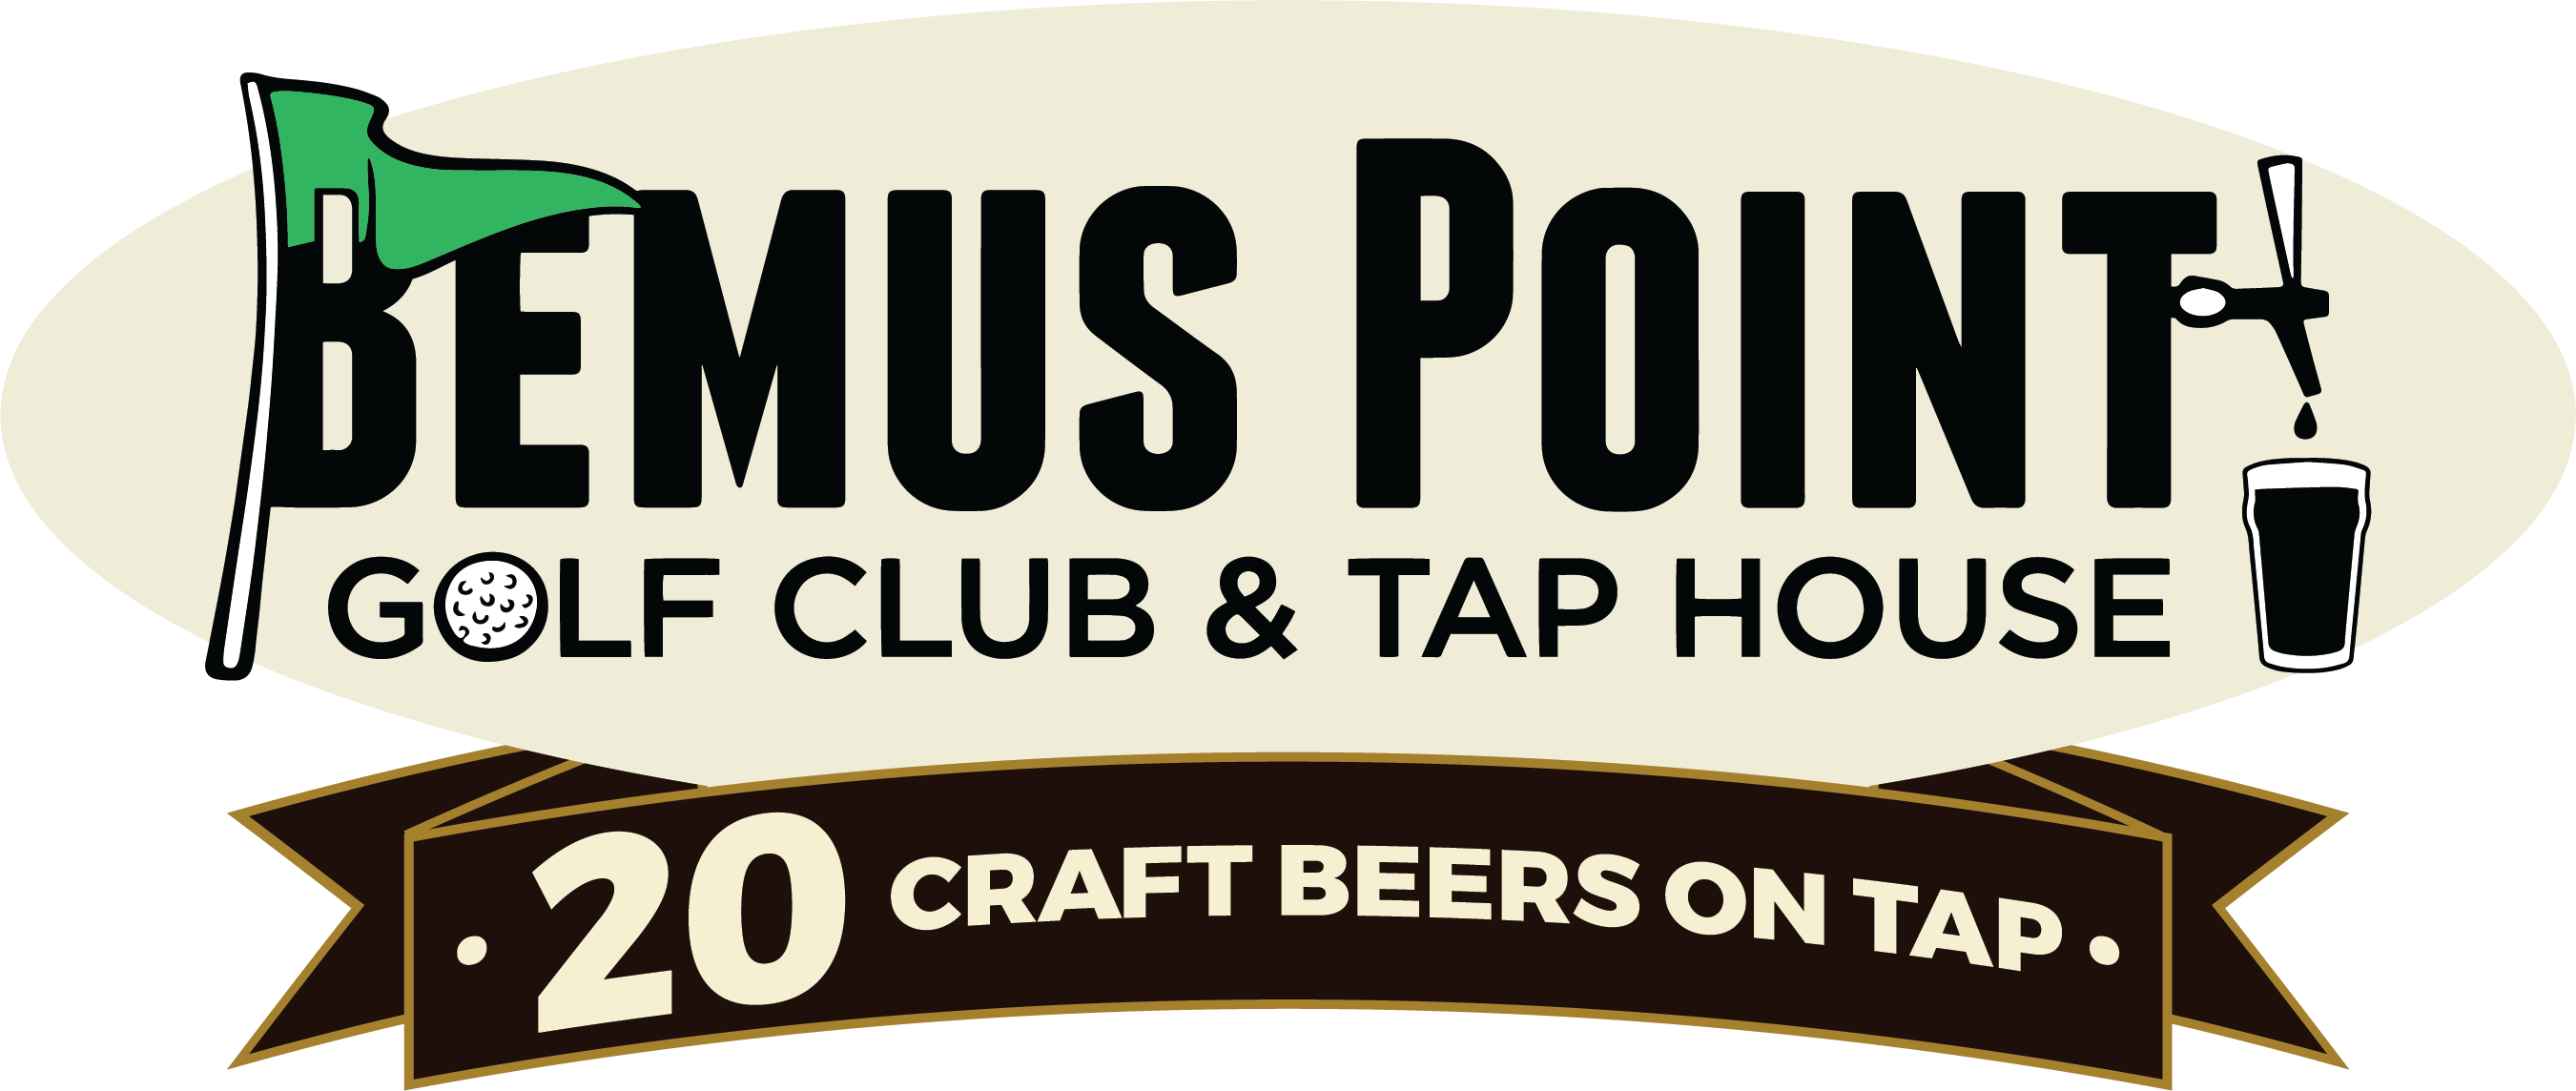 Bemus Point Golf Club & Tap House